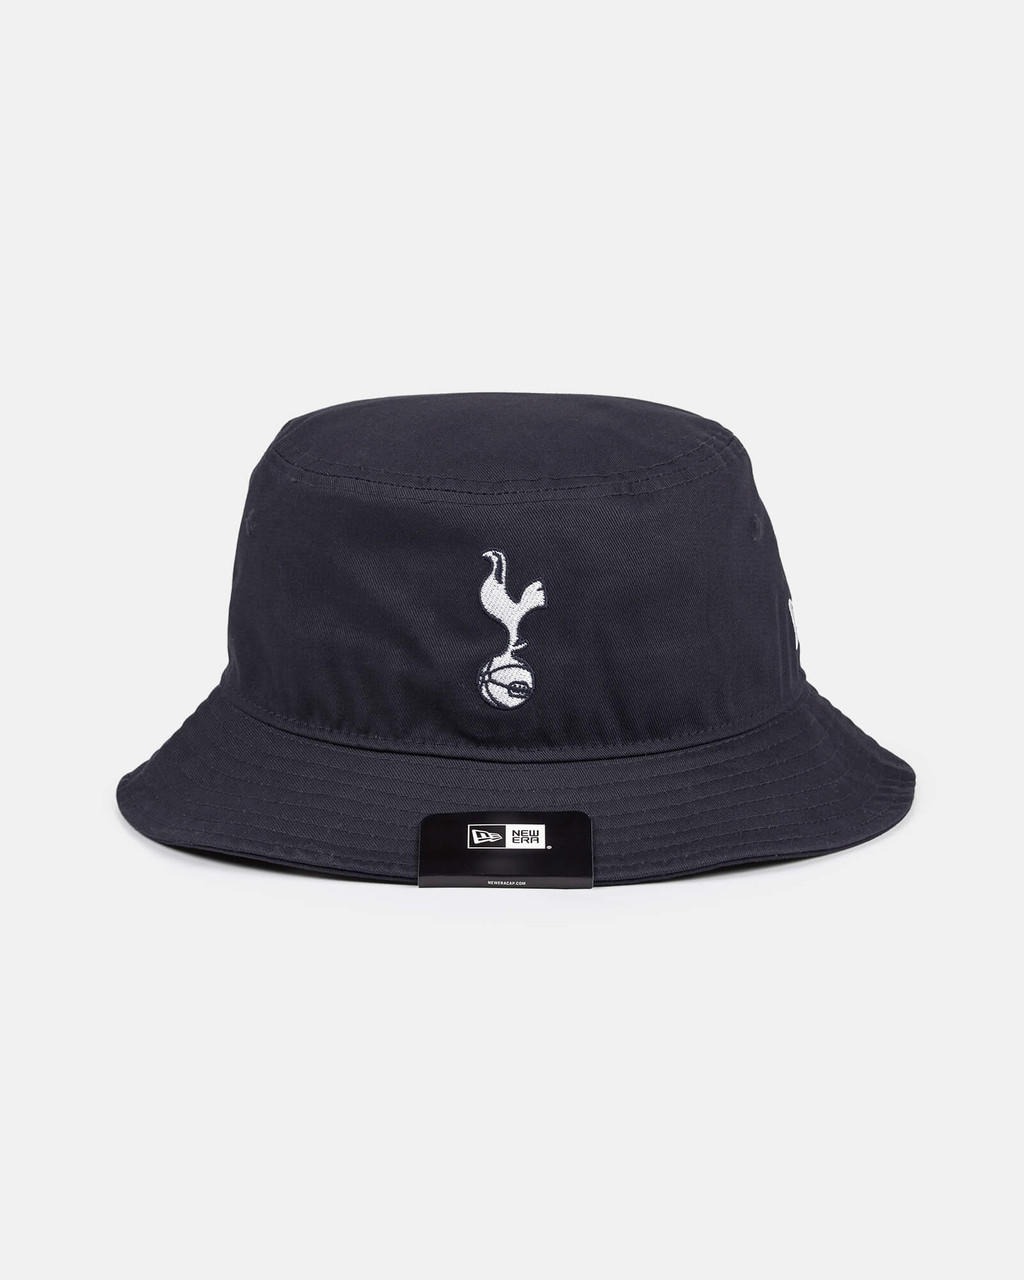 Spurs New Era Navy Bucket Hat - Spurs Shop Online